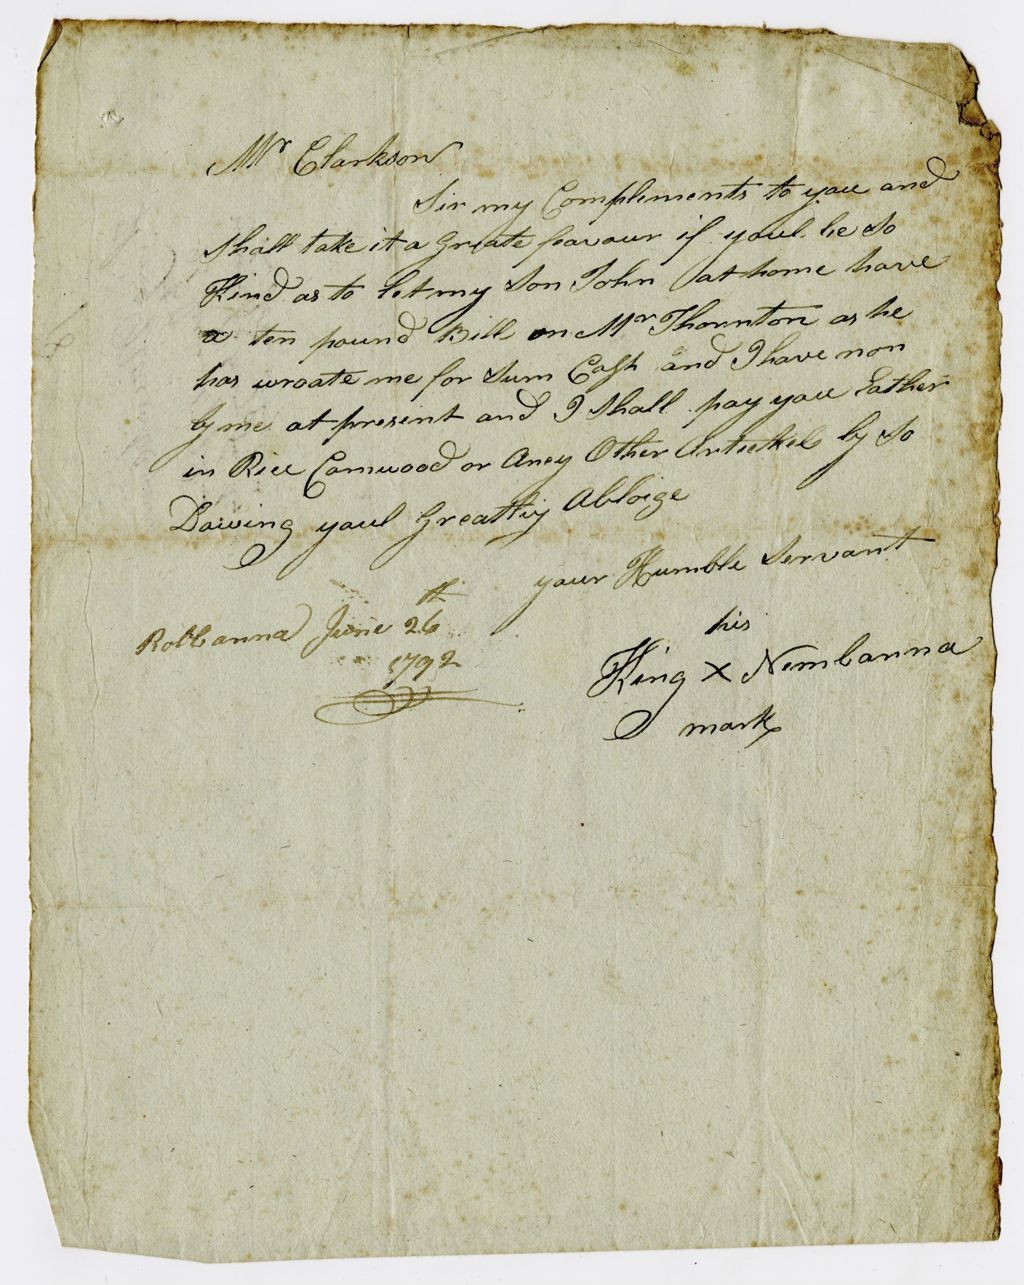 Miniature of Letter from King Naimbanna to John Clarkson, June 26, 1792